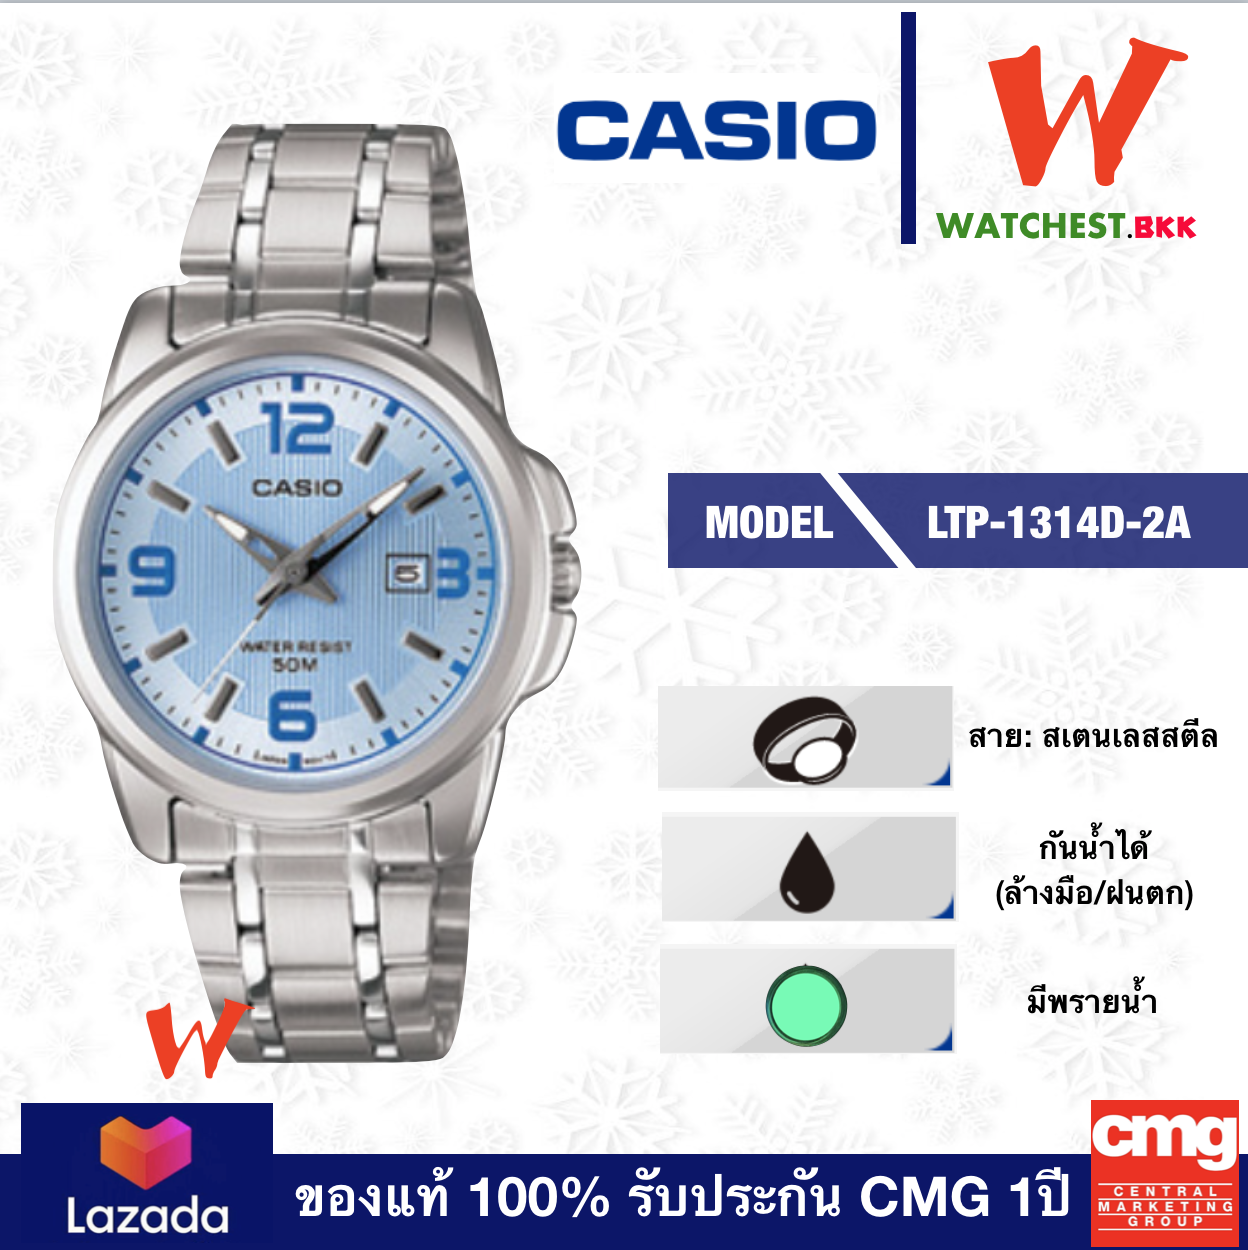 casio นาฬิกาข้อมือผู้หญิง สายสเตนเลส รุ่น LTP-1314D-2A, คาสิโอ้ LTP, LTP-1314 หน้าปัดสีฟ้า ตัวล็อกบานพับ (watchestbkk คาสิโอ แท้ ของแท้100% ประกัน CMG)